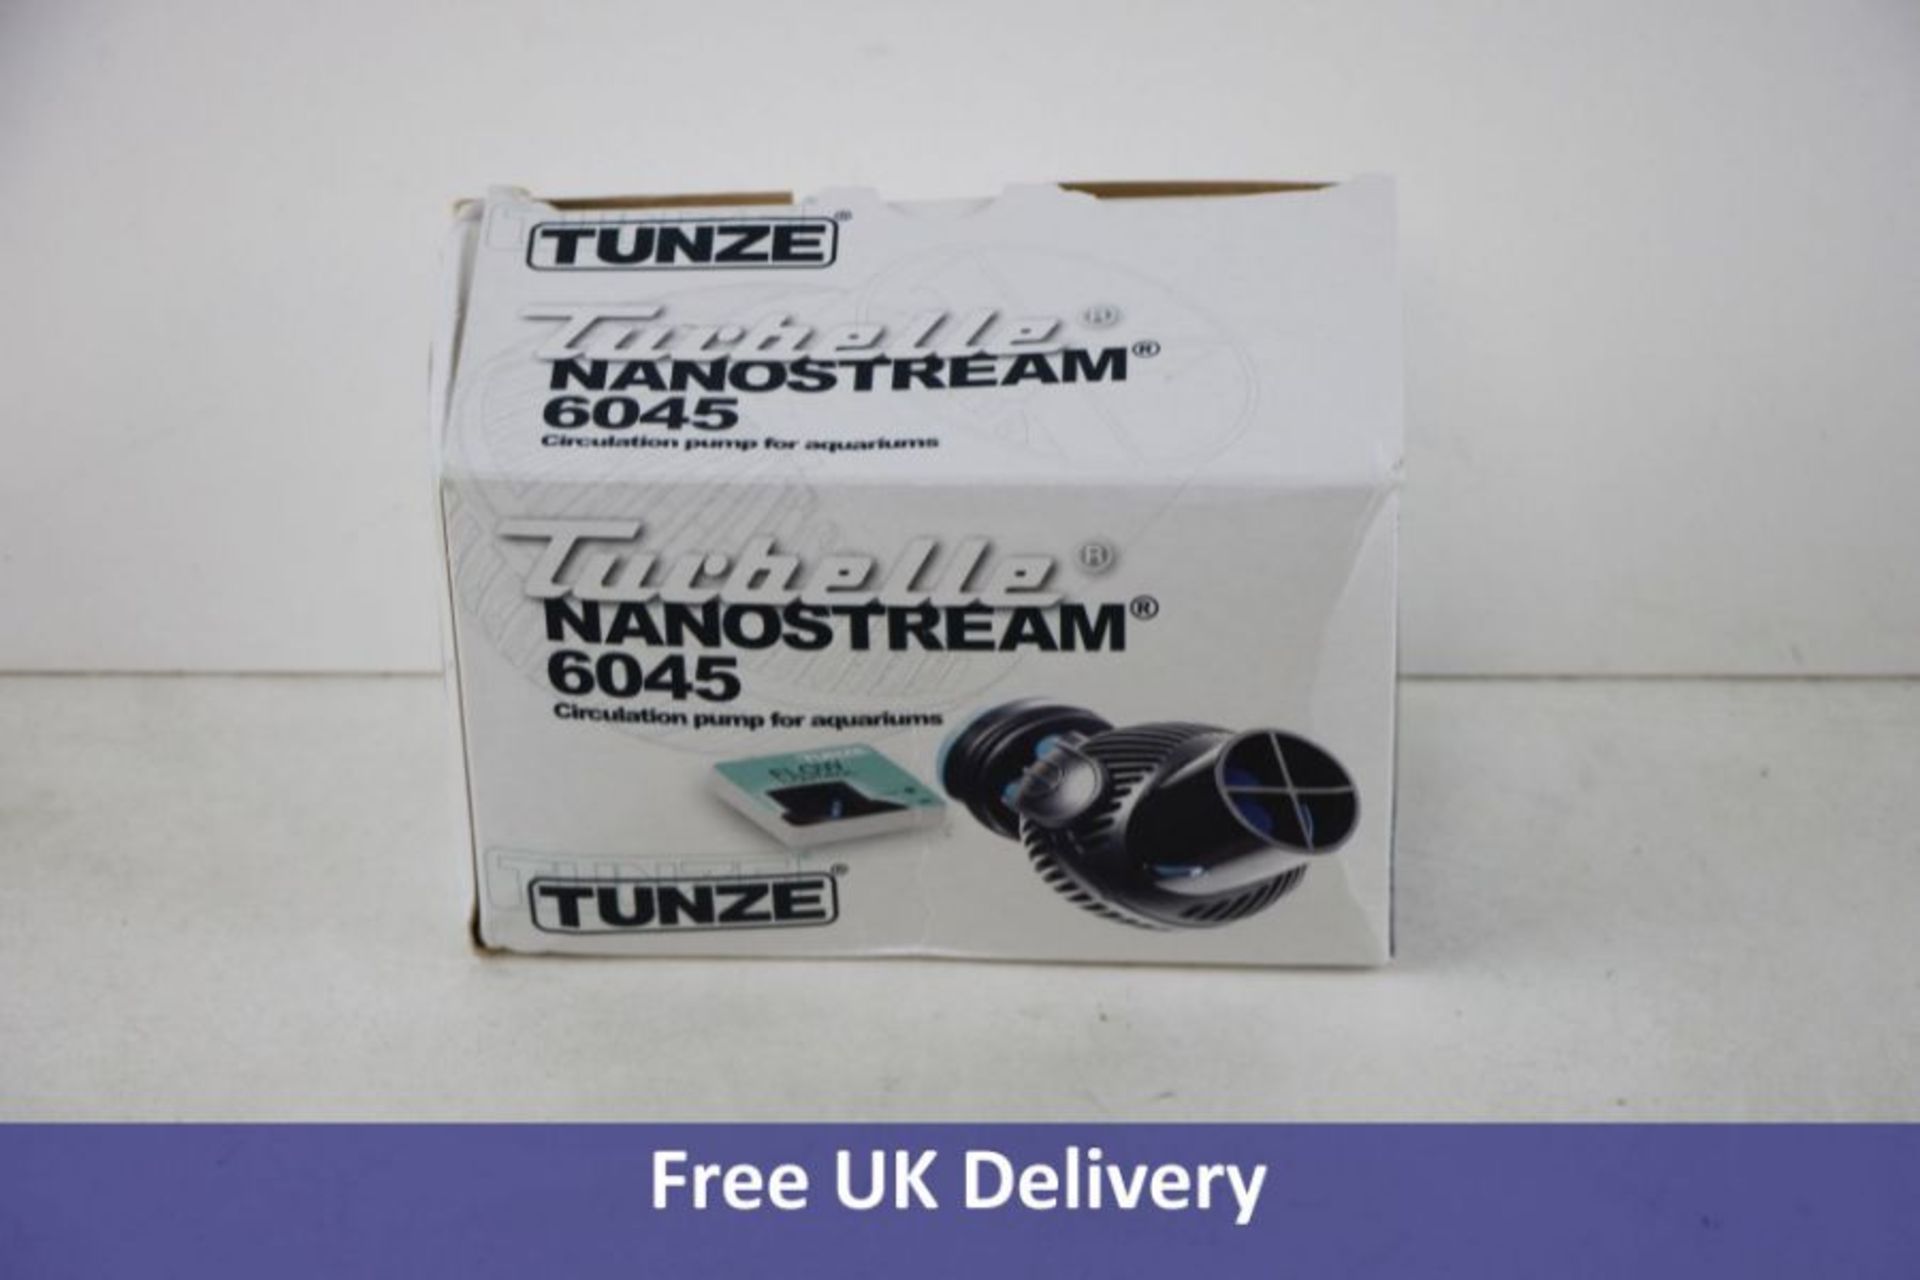 Tunze Nanostream 6025 Circulation Pump for Aquariums